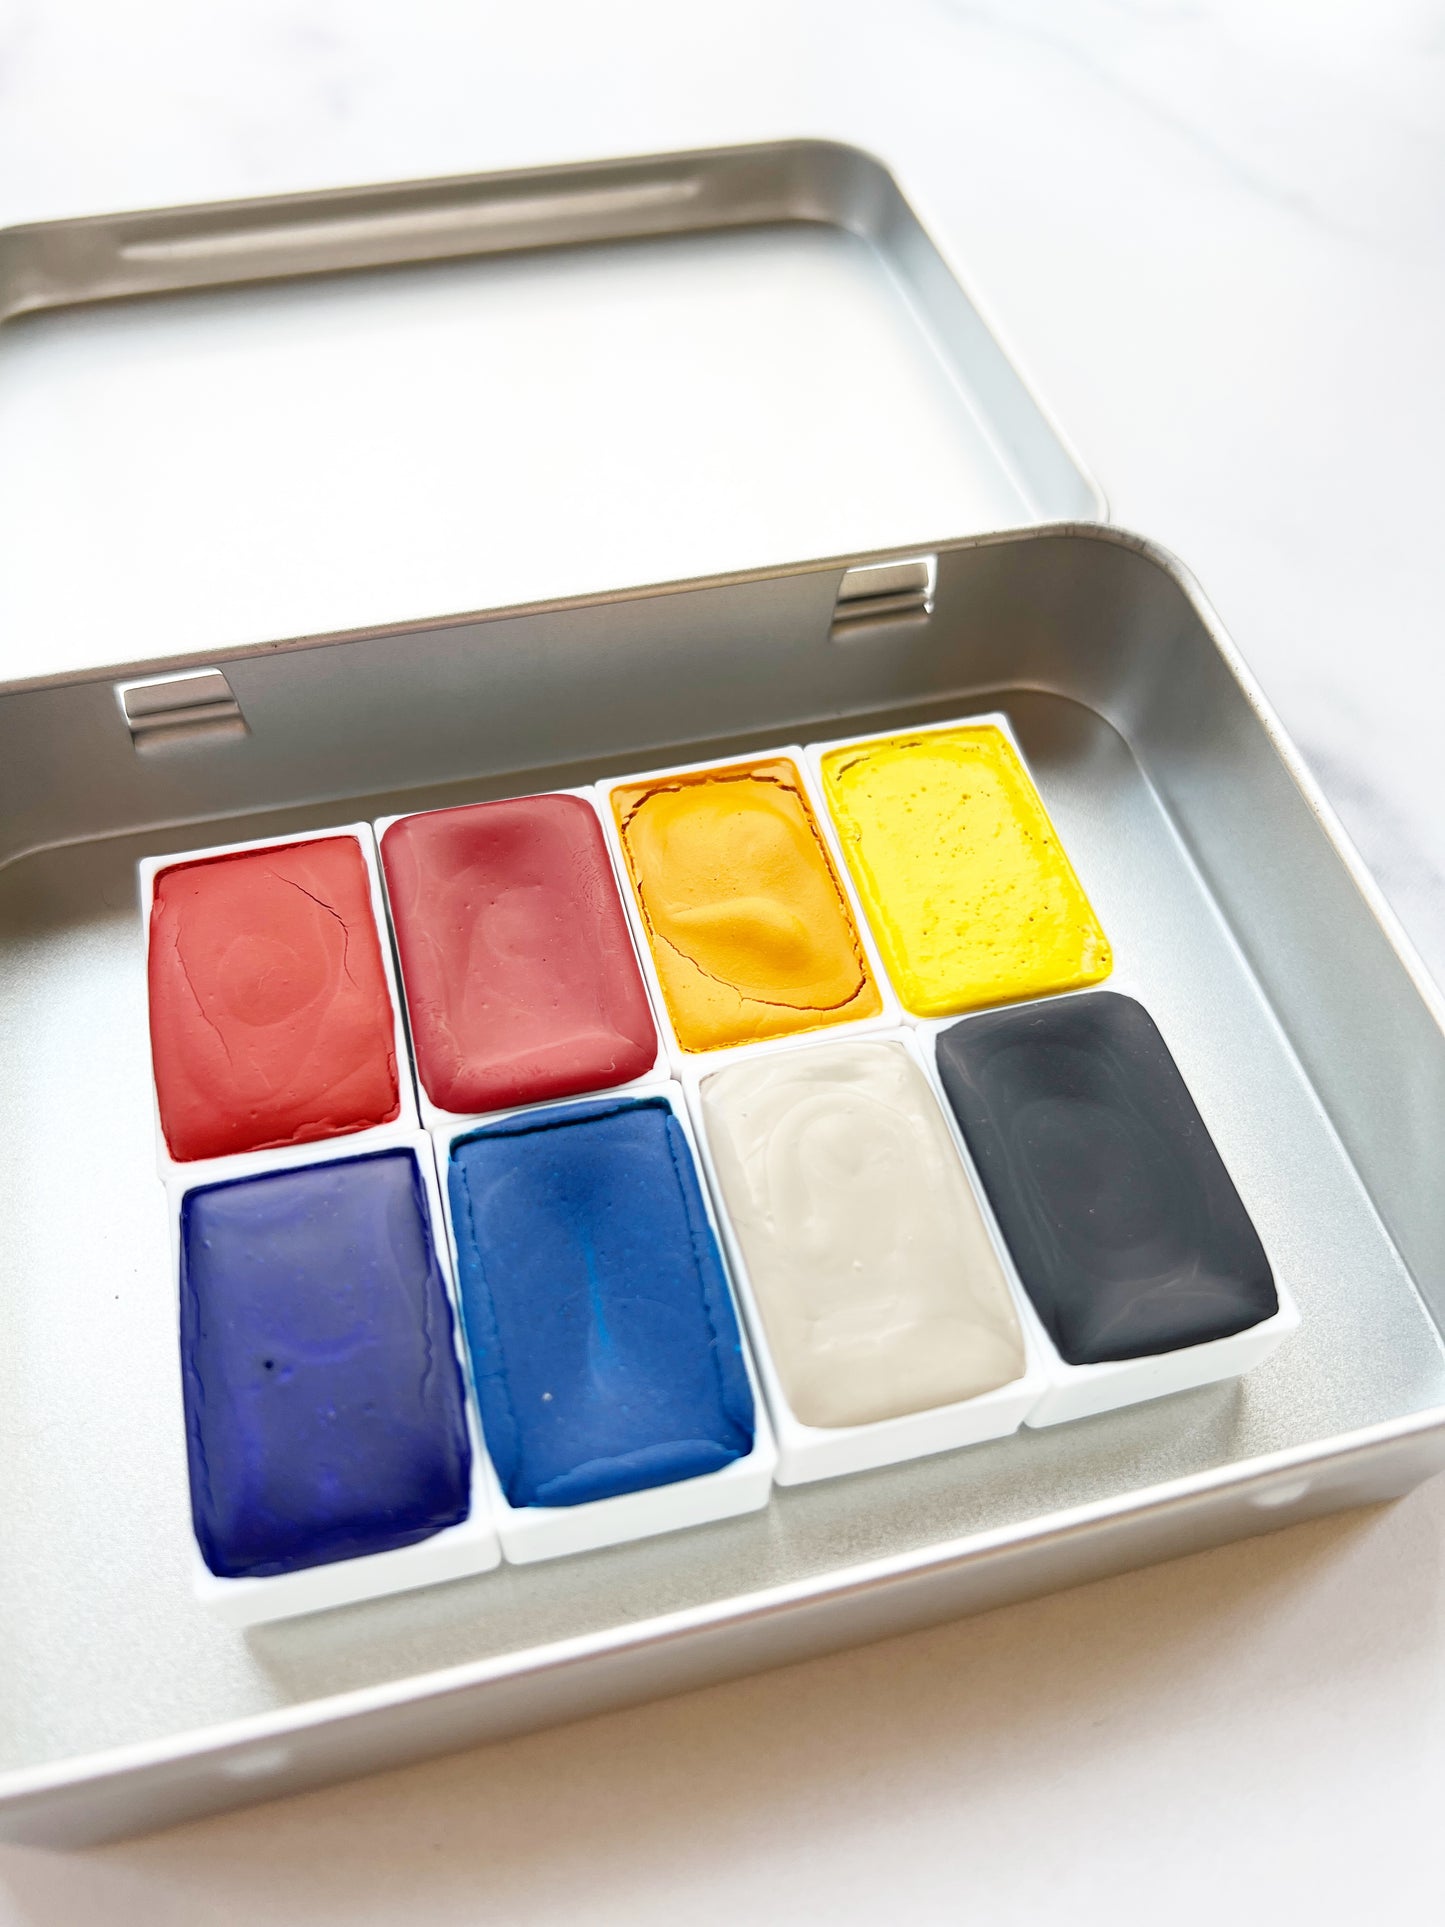 Primary 8 Full Pan Set, a full pan palette of handmade watercolor paint